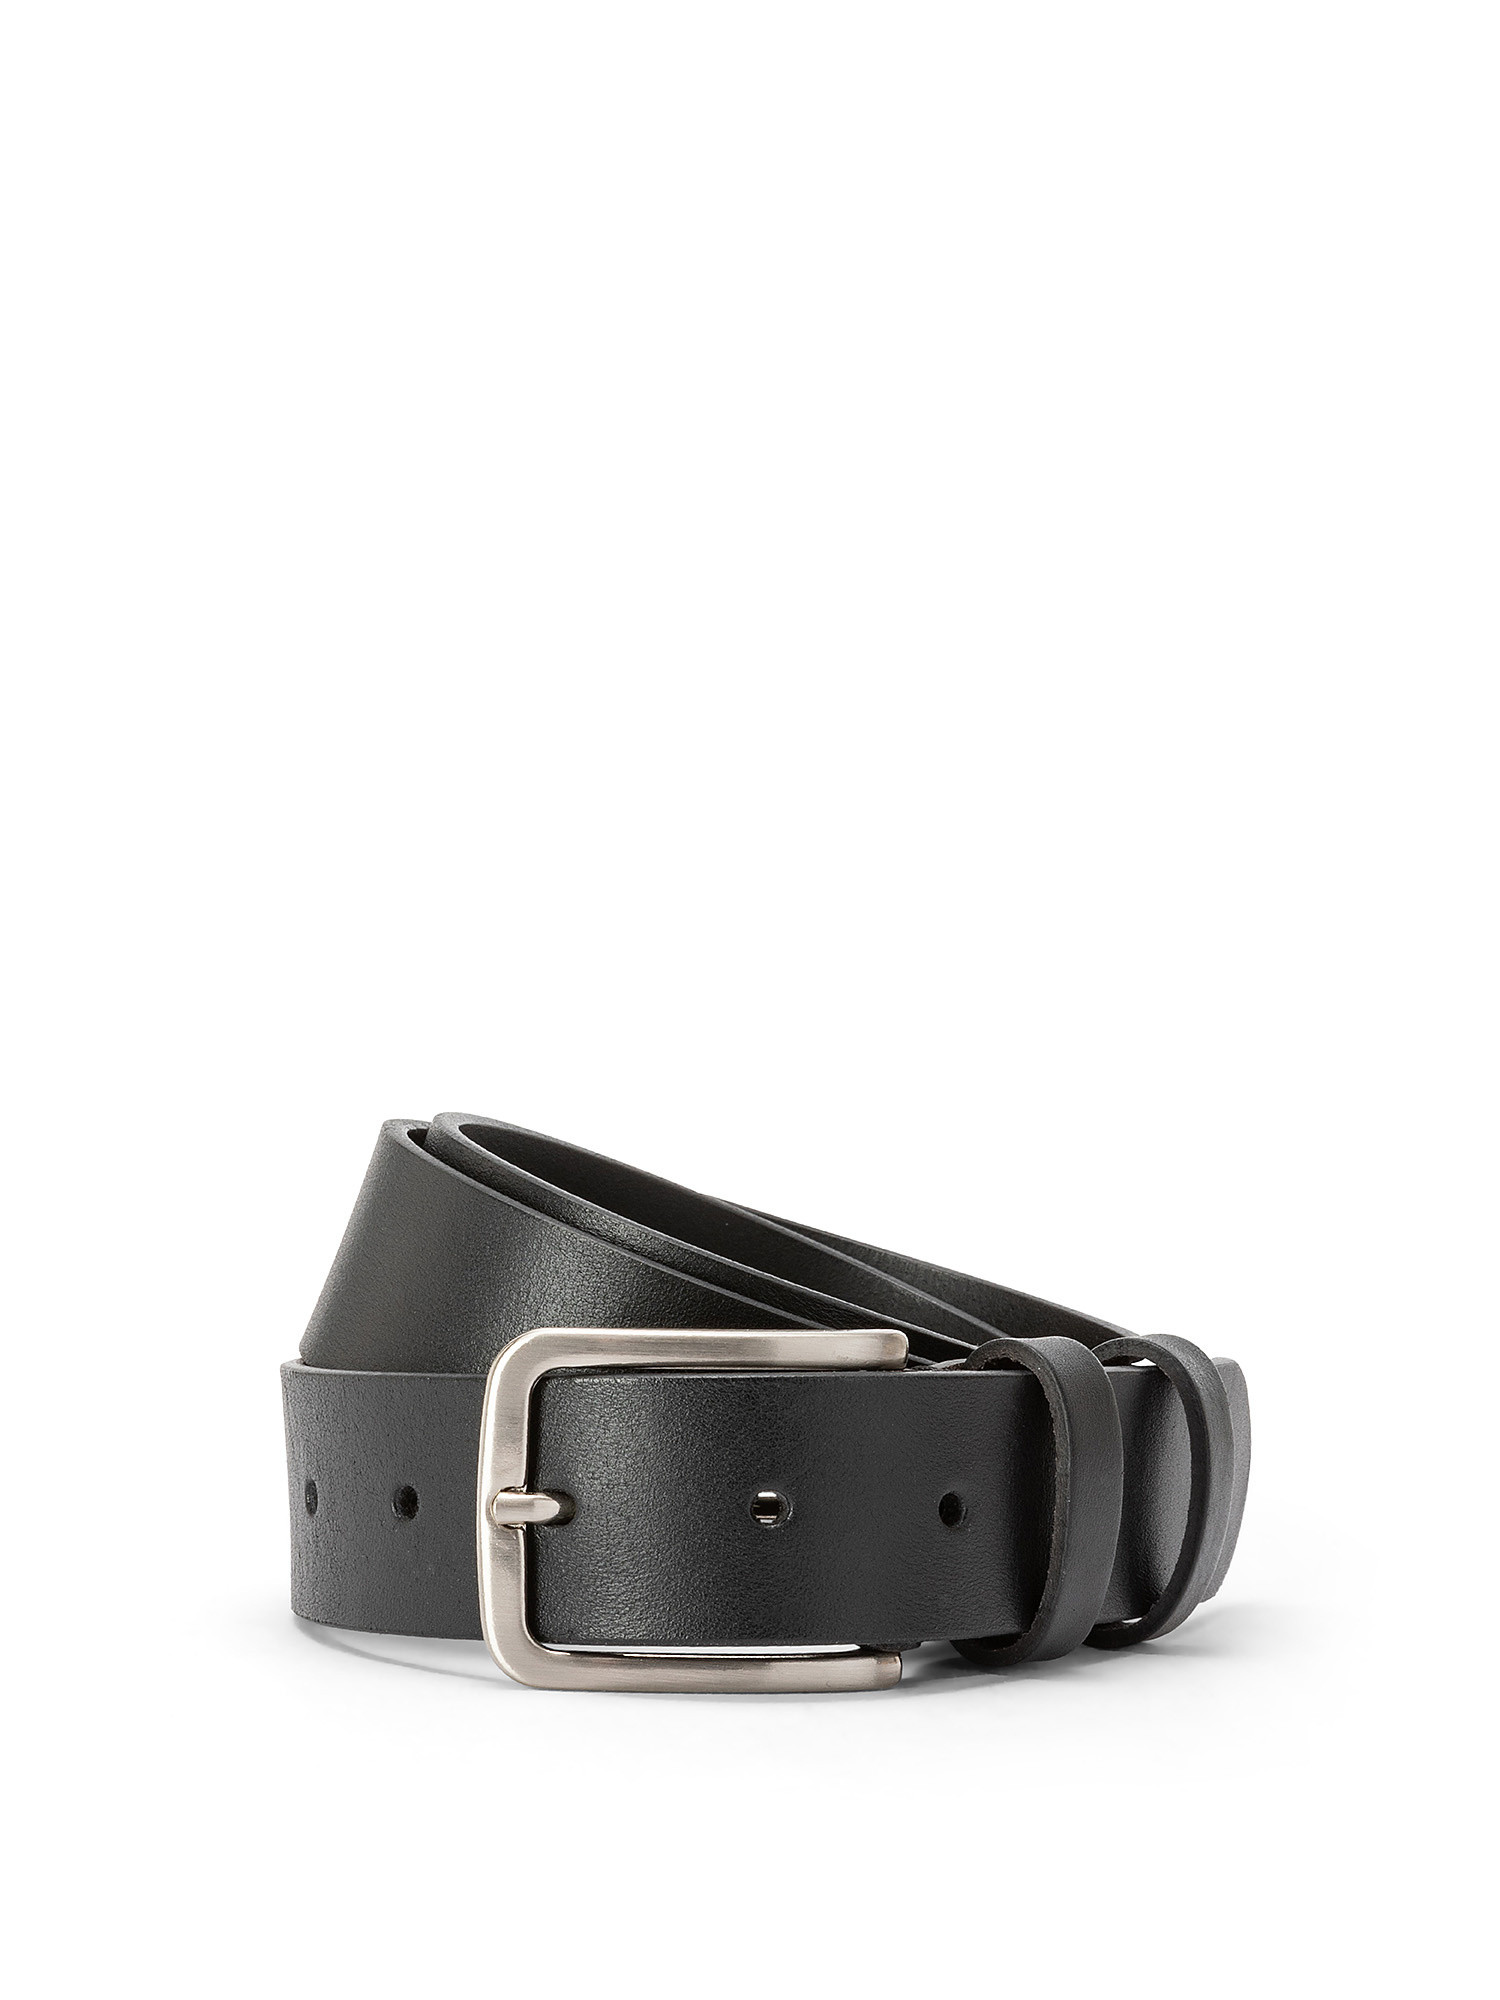 Luca D'Altieri - Leather belt, Black, large image number 0